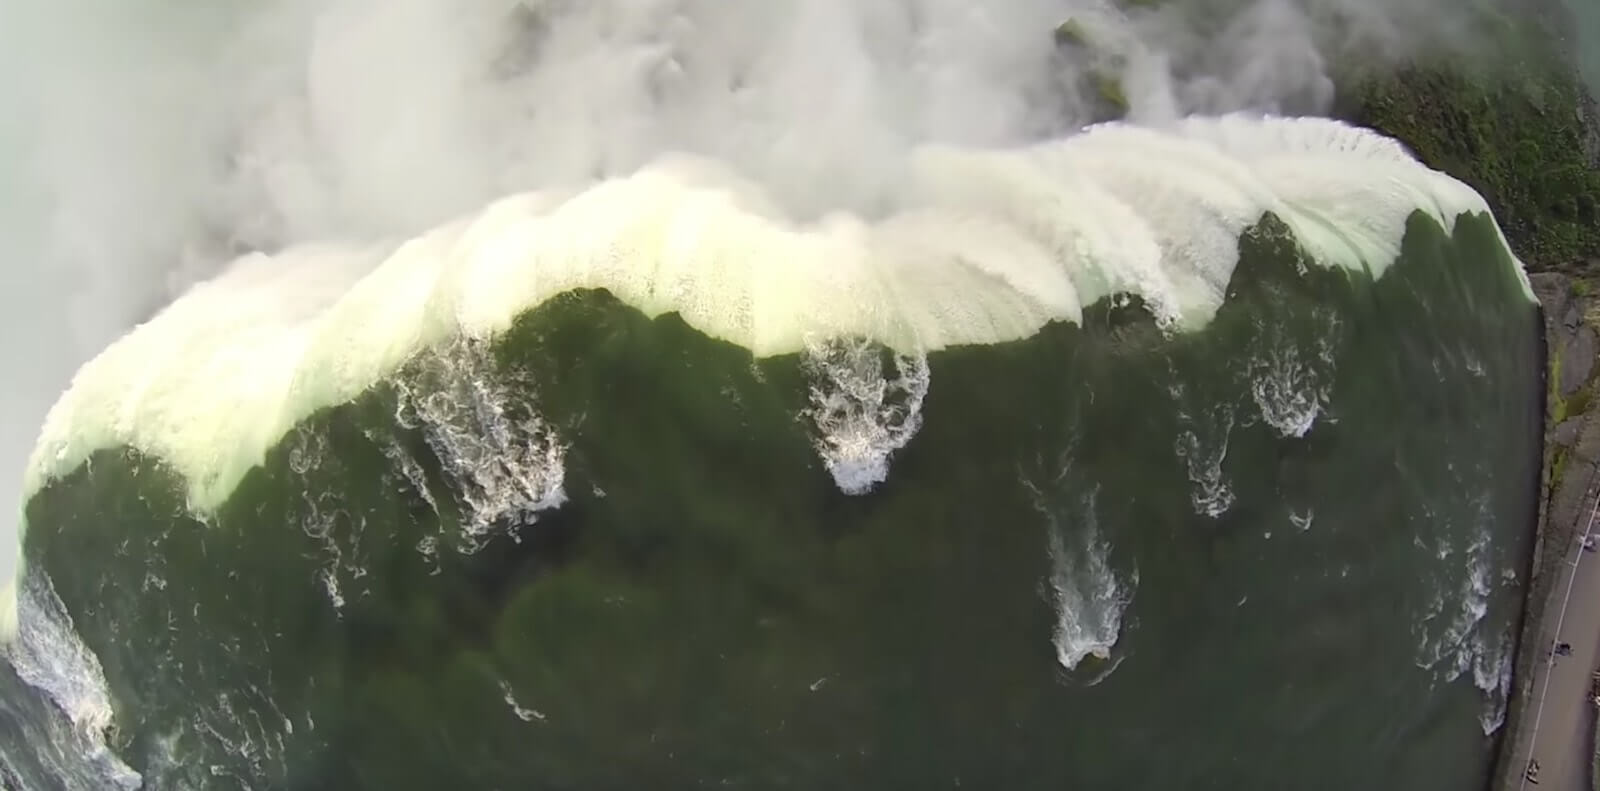 Epic Drone Shots - The Best Drone Video Footage - Epic Niagara Falls alien waterfall